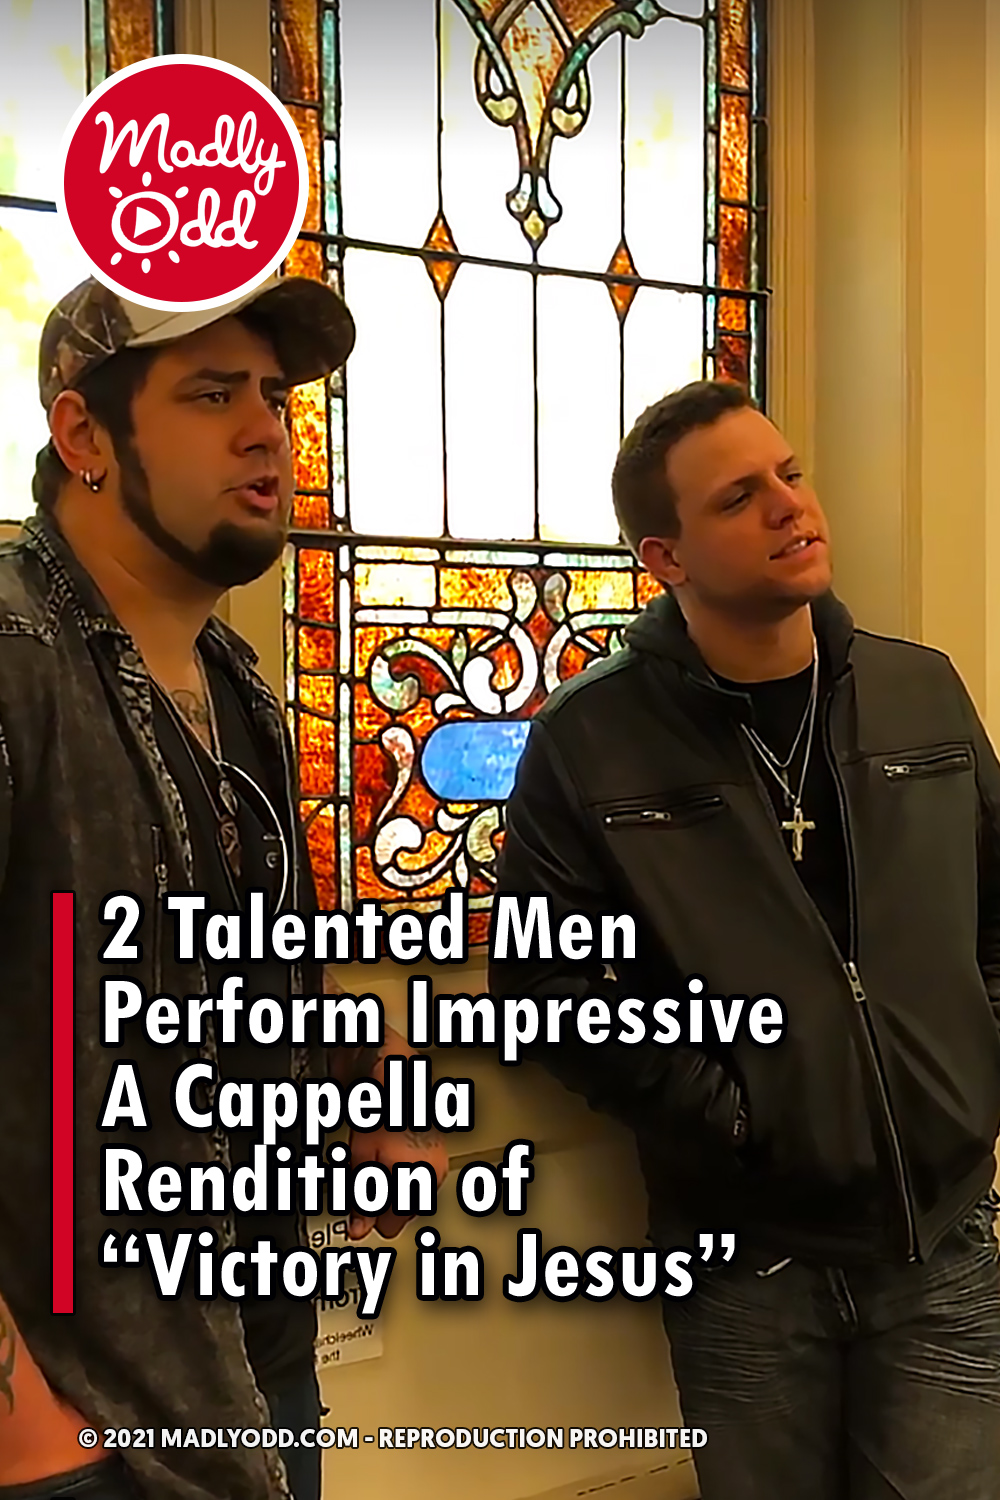 2 Talented Men Perform Impressive A Cappella Rendition of “Victory in Jesus”